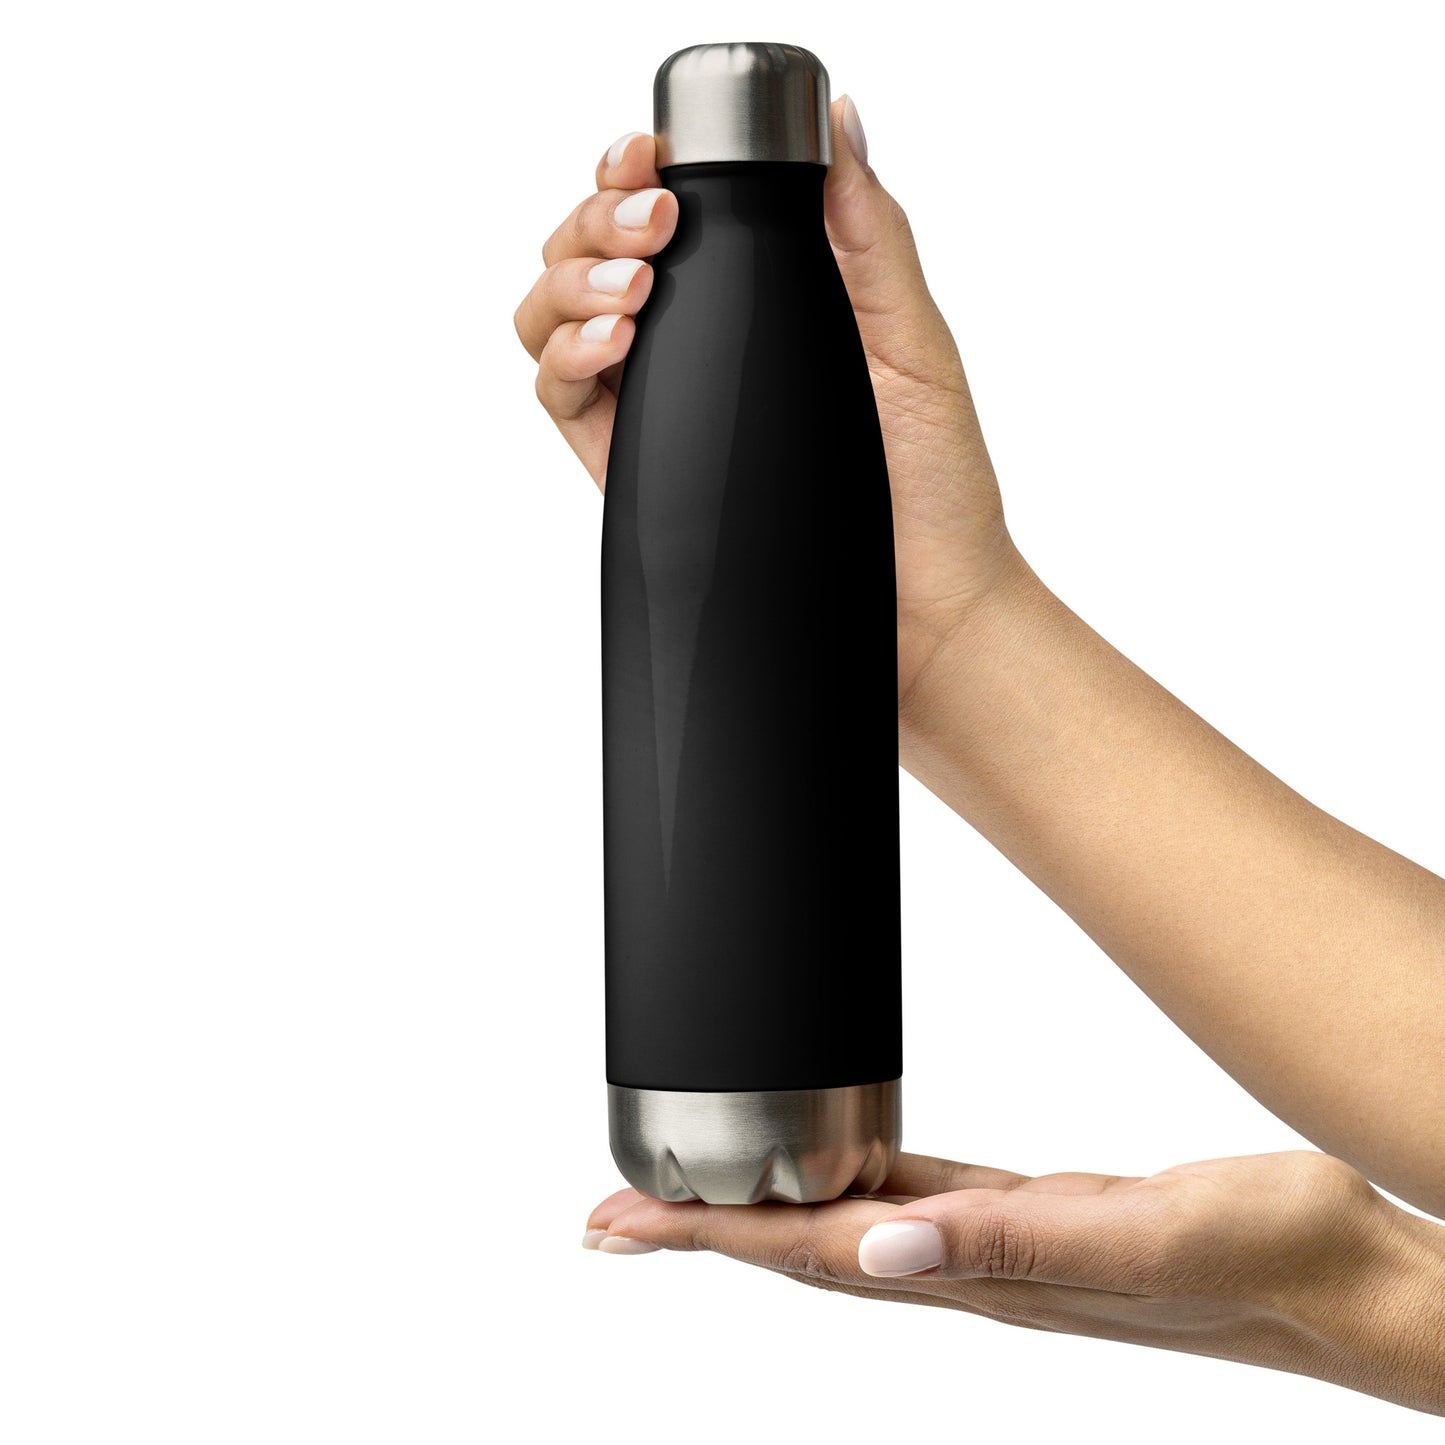 Tejas - Stainless steel water bottle